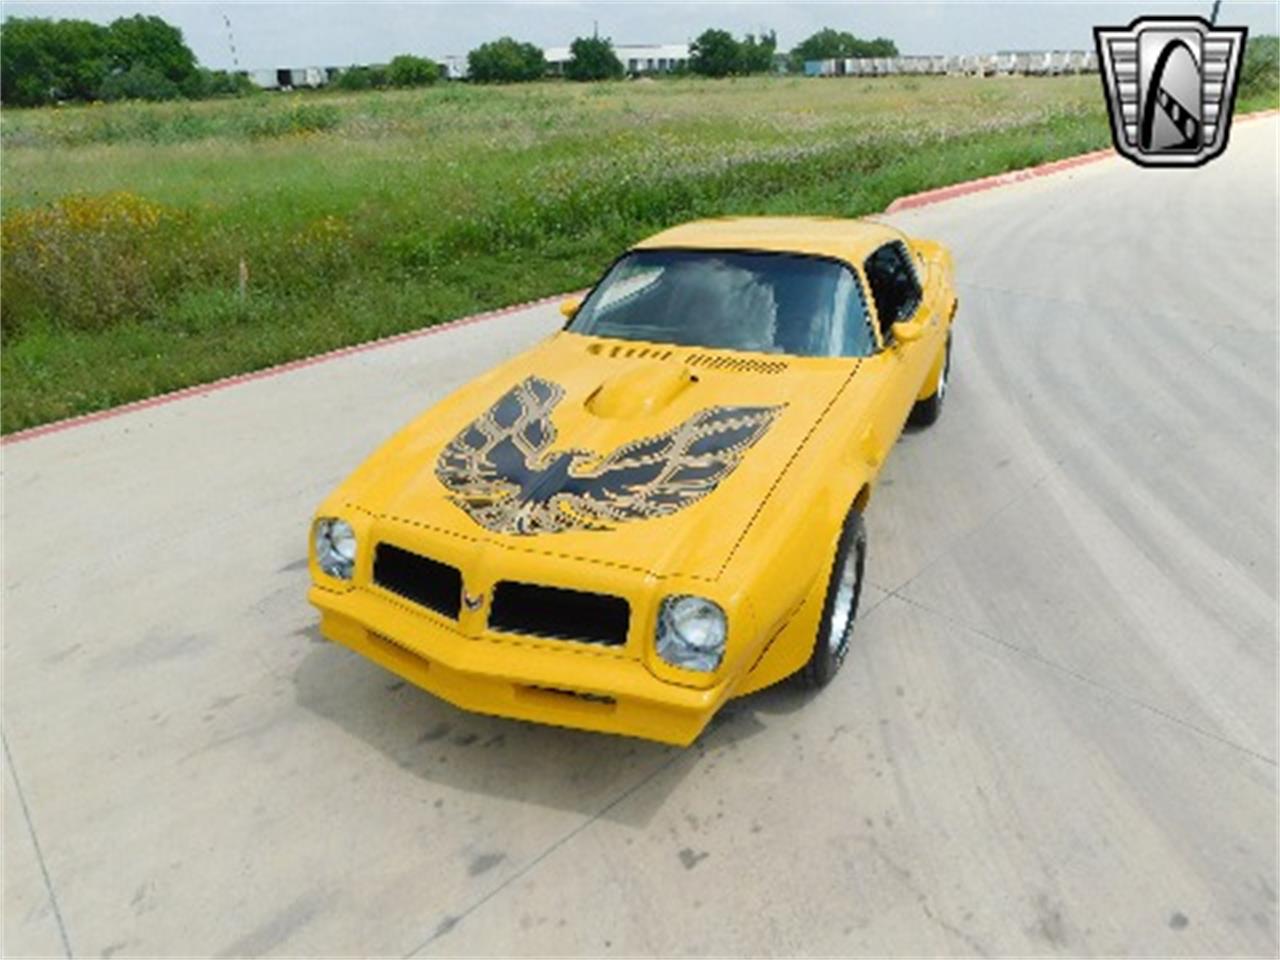 For Sale: 1976 Pontiac Firebird Trans Am in Kingsland, Texas for sale in Kingsland, TX